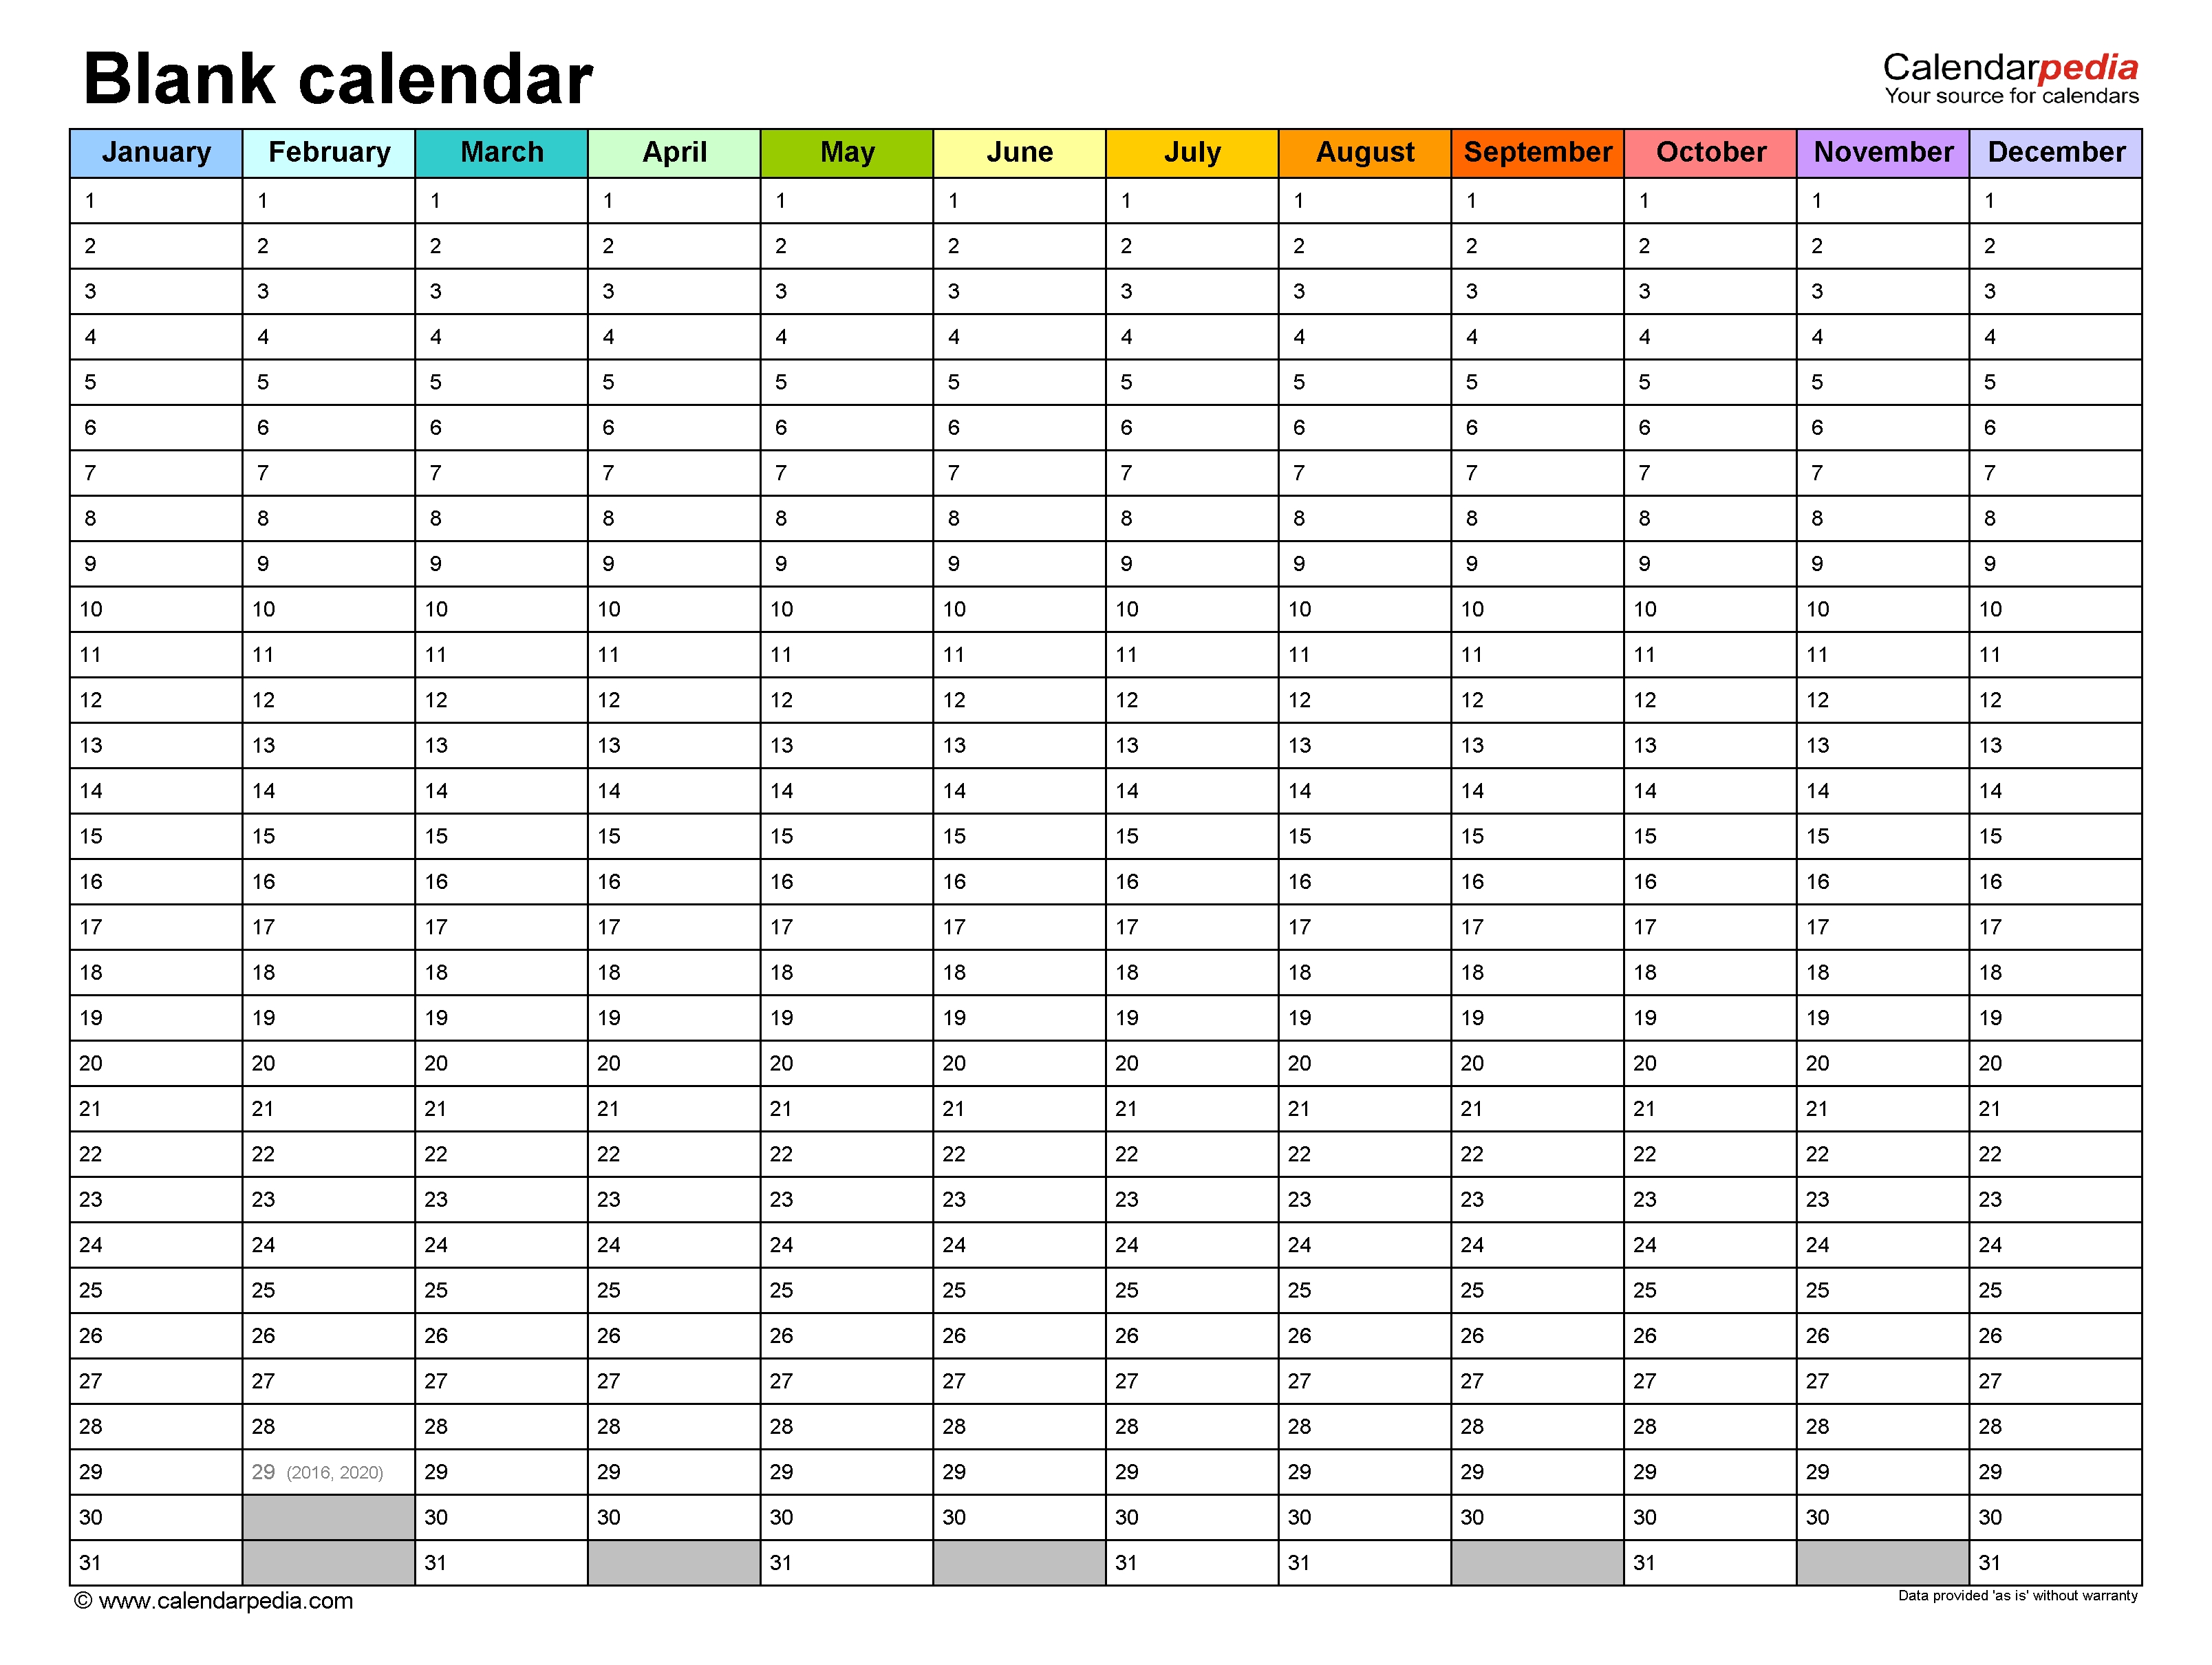 Blank Calendars - Free Printable Microsoft Word Templates Calendar Template In Word For Mac